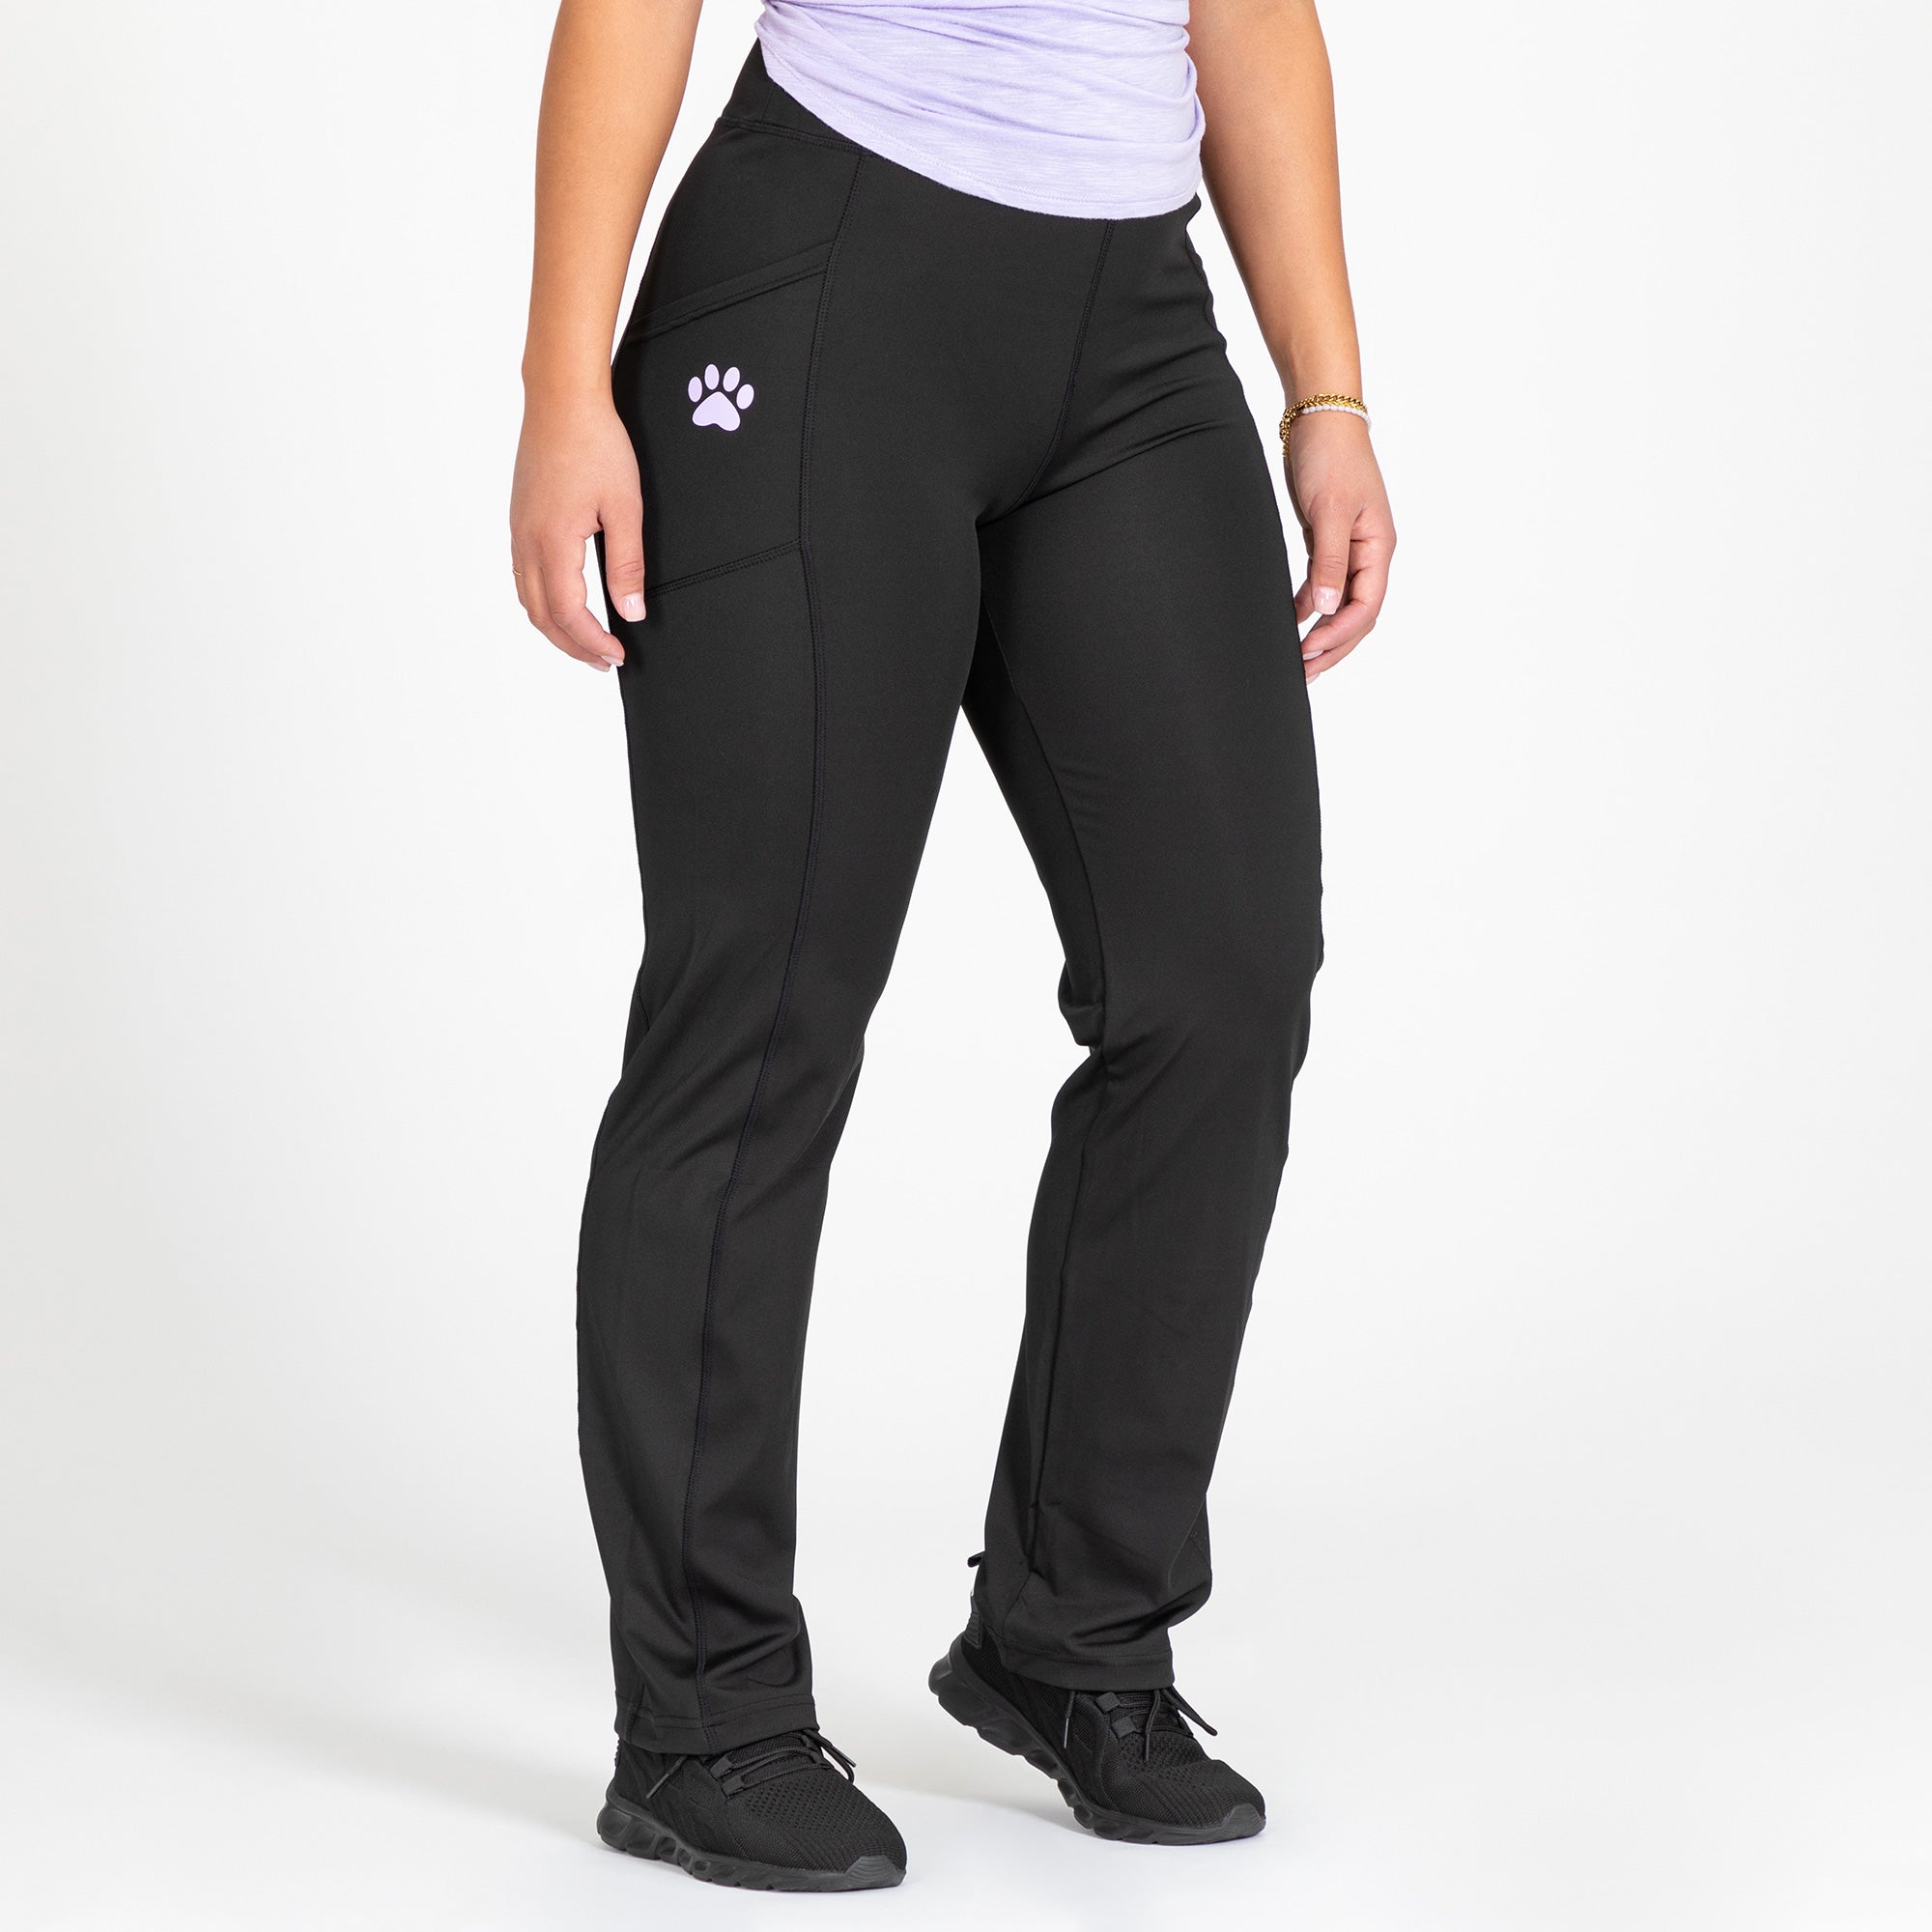 Purple Paw Yoga Separates - Pants - Black - M